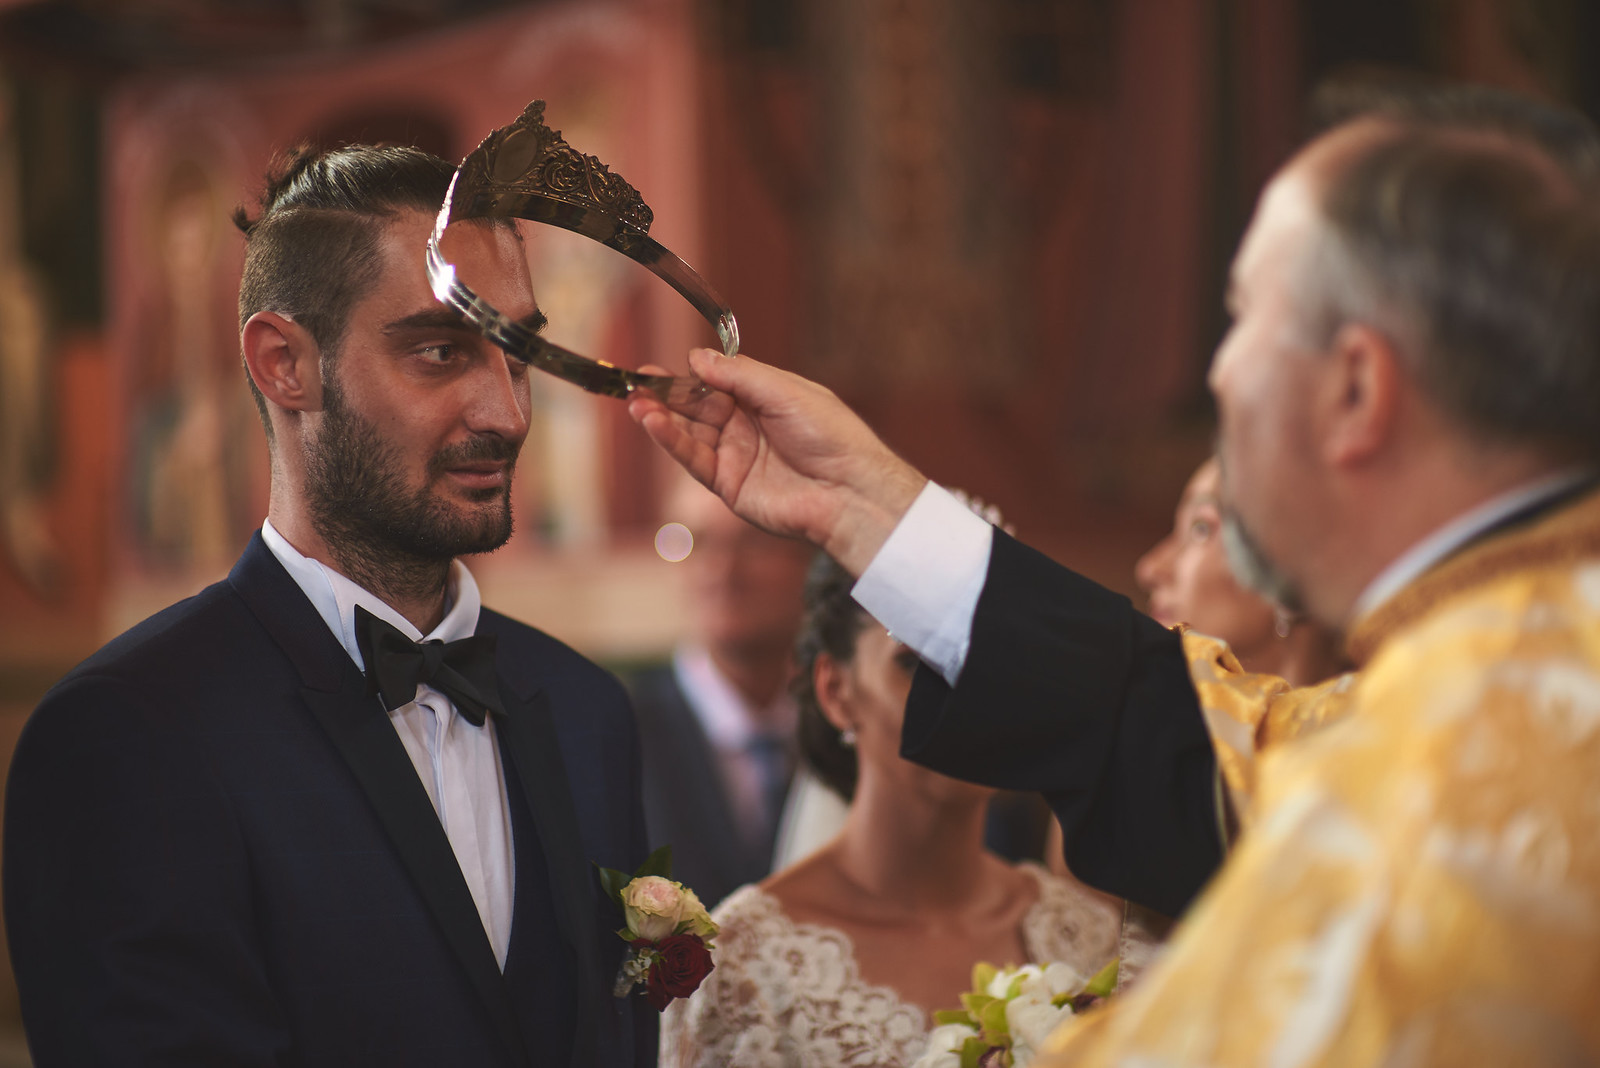 epspictures, Bucharest Wedding Photography